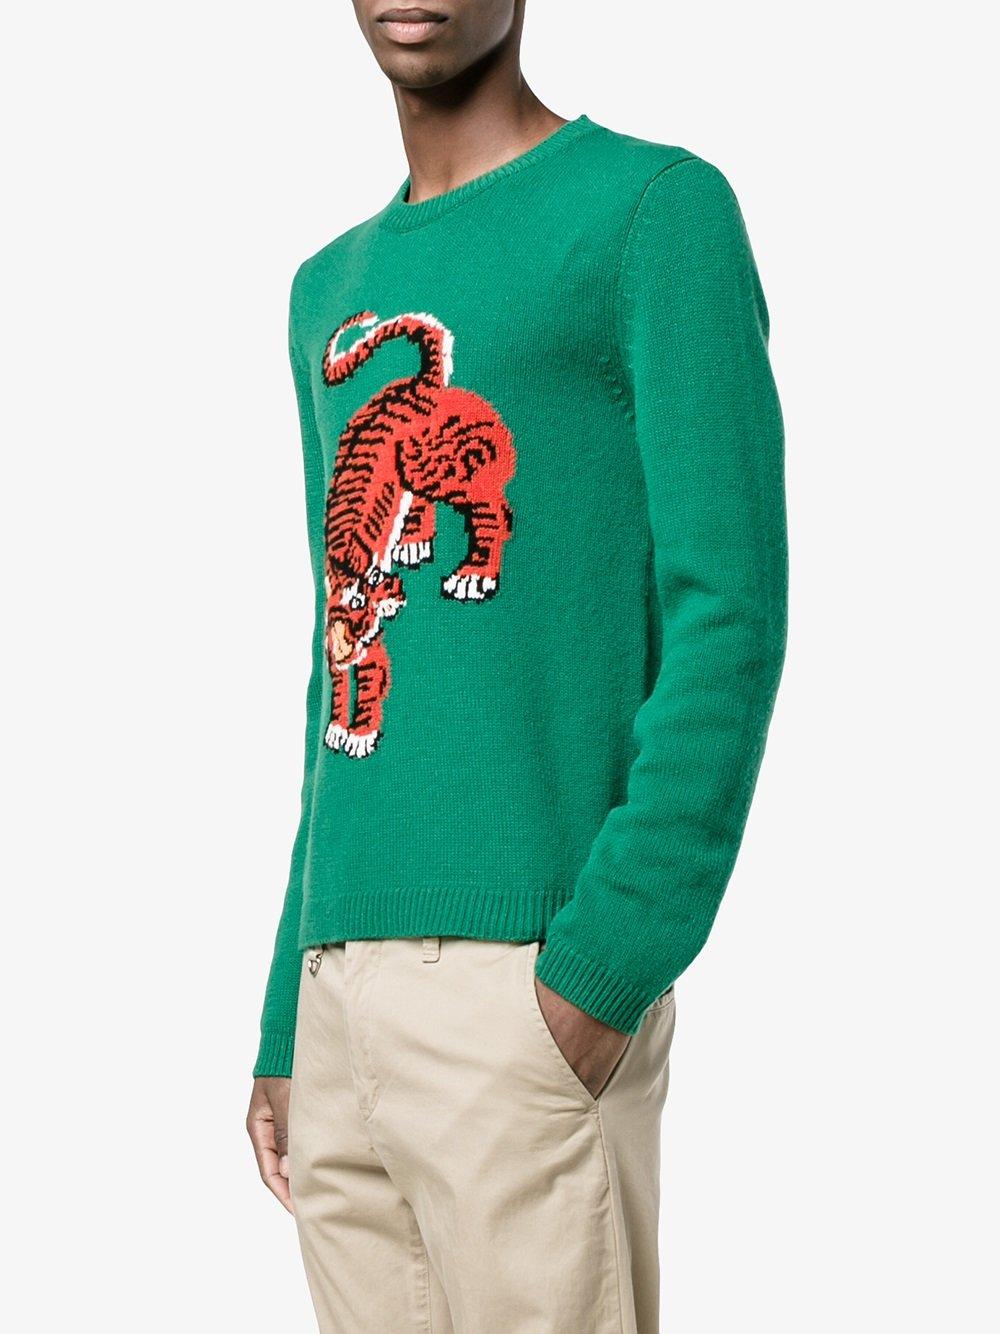 Gucci Intarsia Tiger Jumper in Green for Men